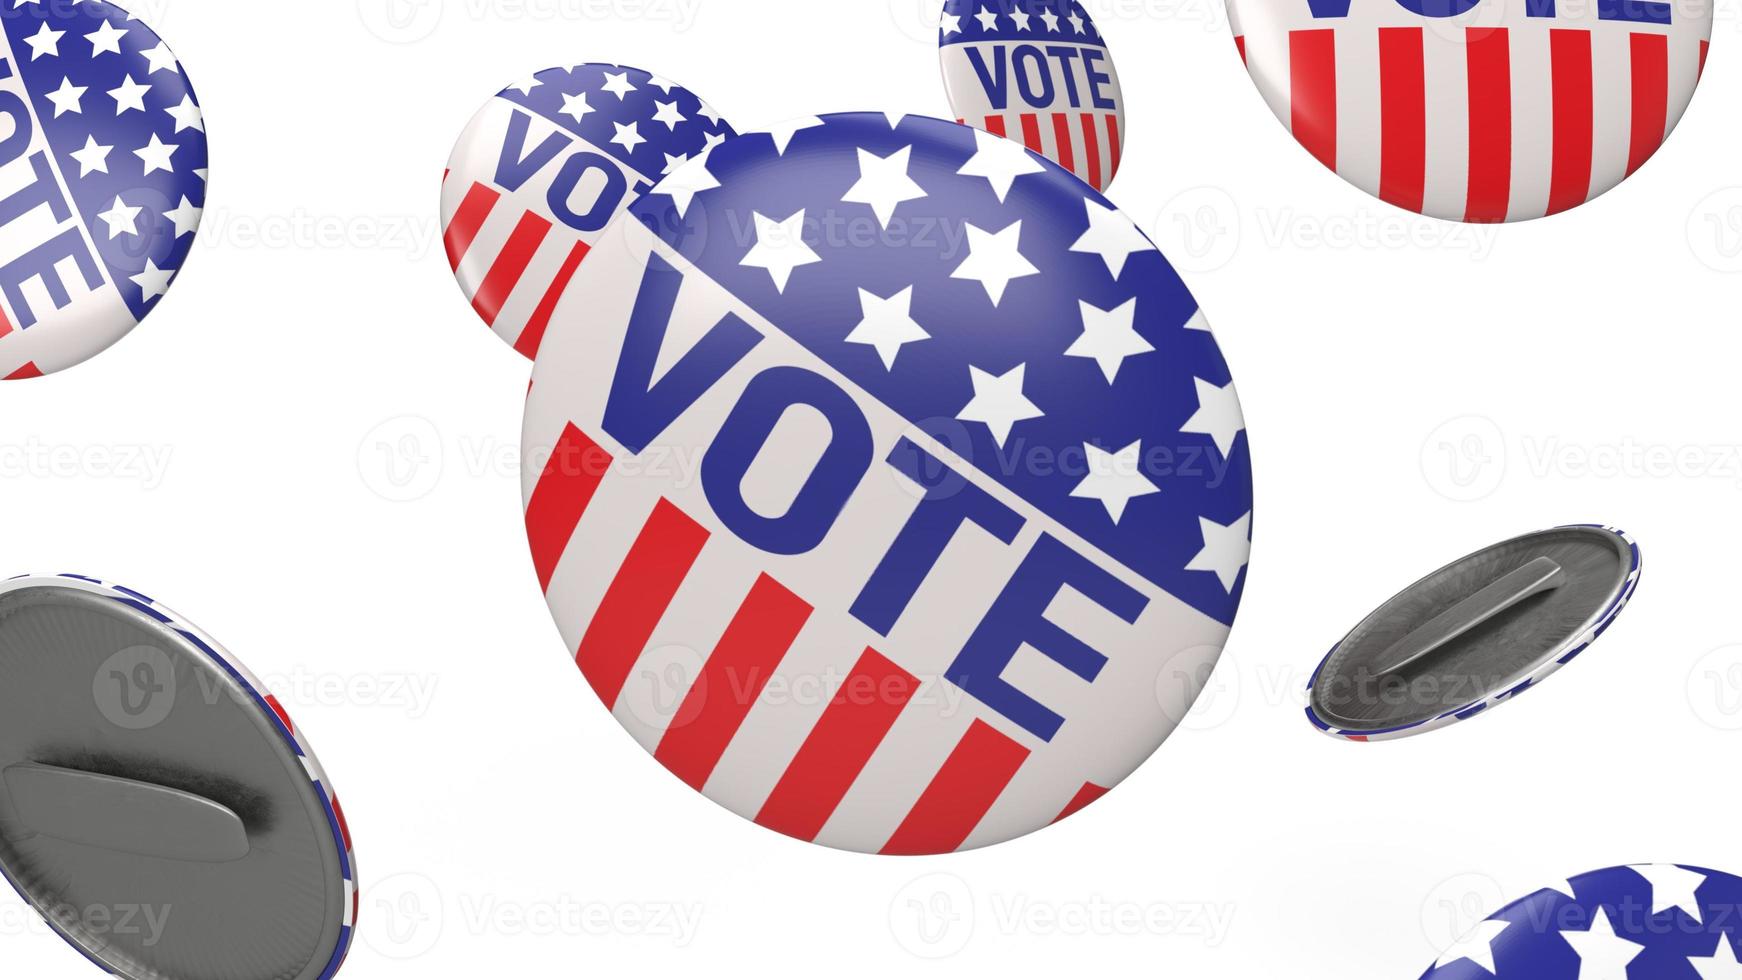 Amerikaanse stembadges op witte achtergrond voor 3D-rendering van sociale inhoud foto